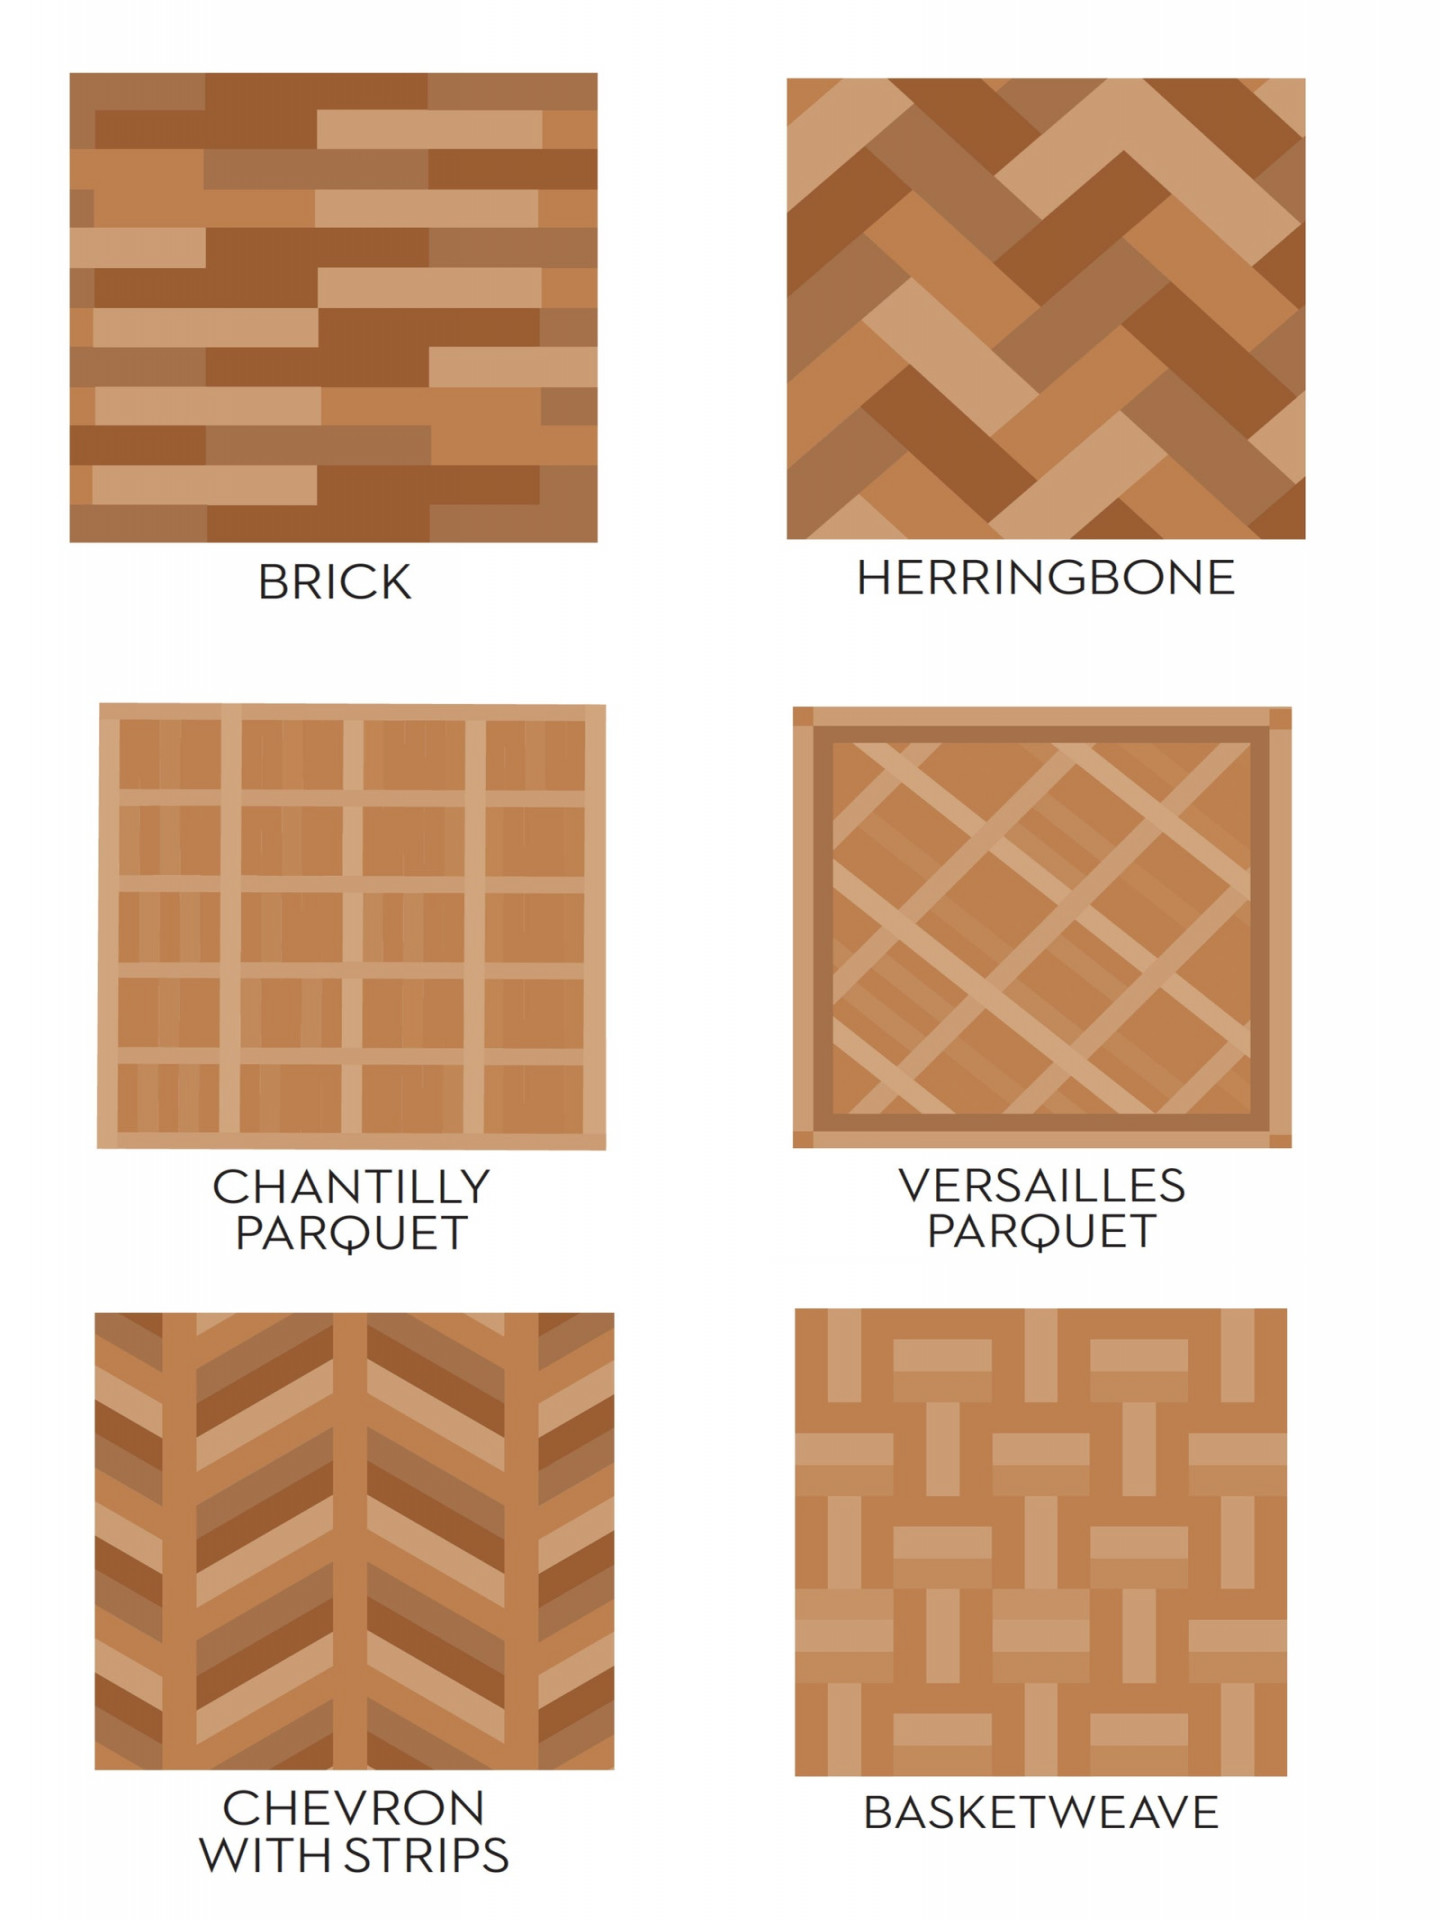 Wood Floor Patterns